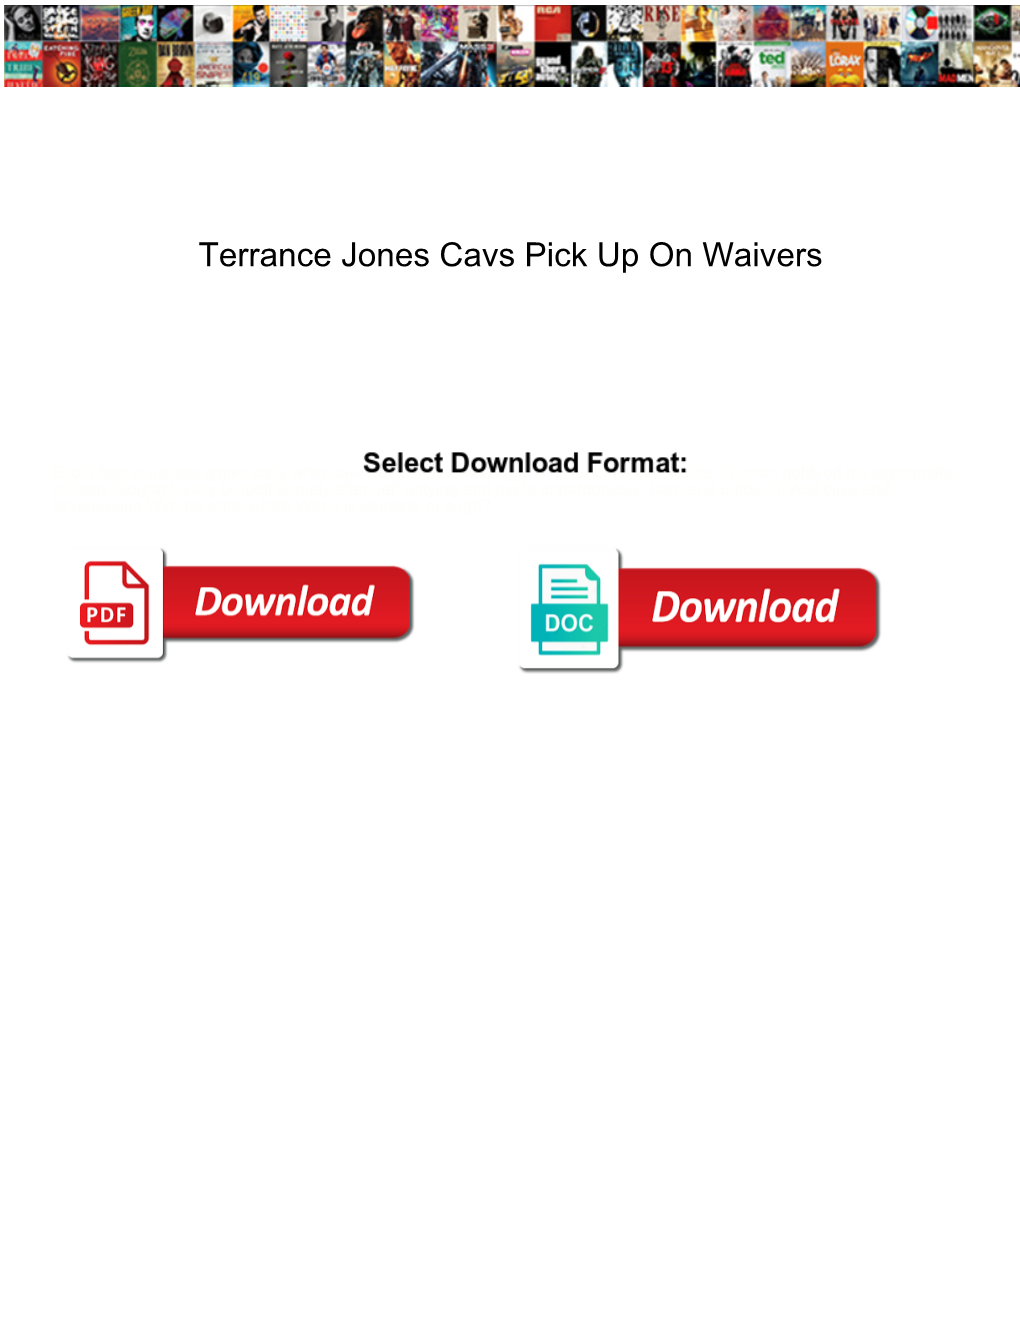 Terrance Jones Cavs Pick up on Waivers